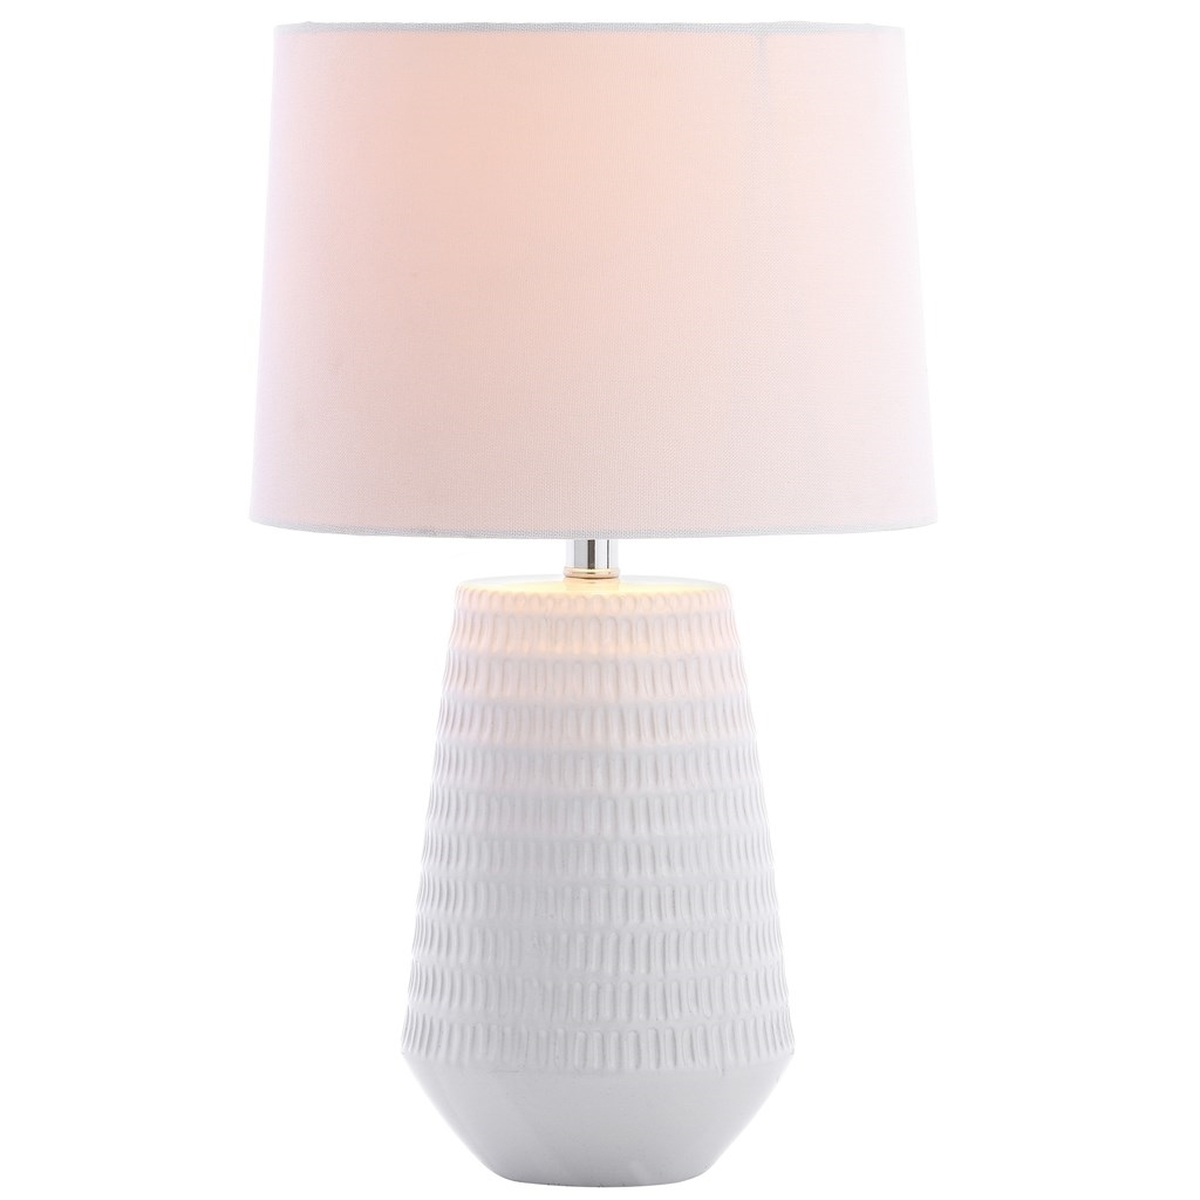 Stark Table Lamp - White - Arlo Home - Image 1